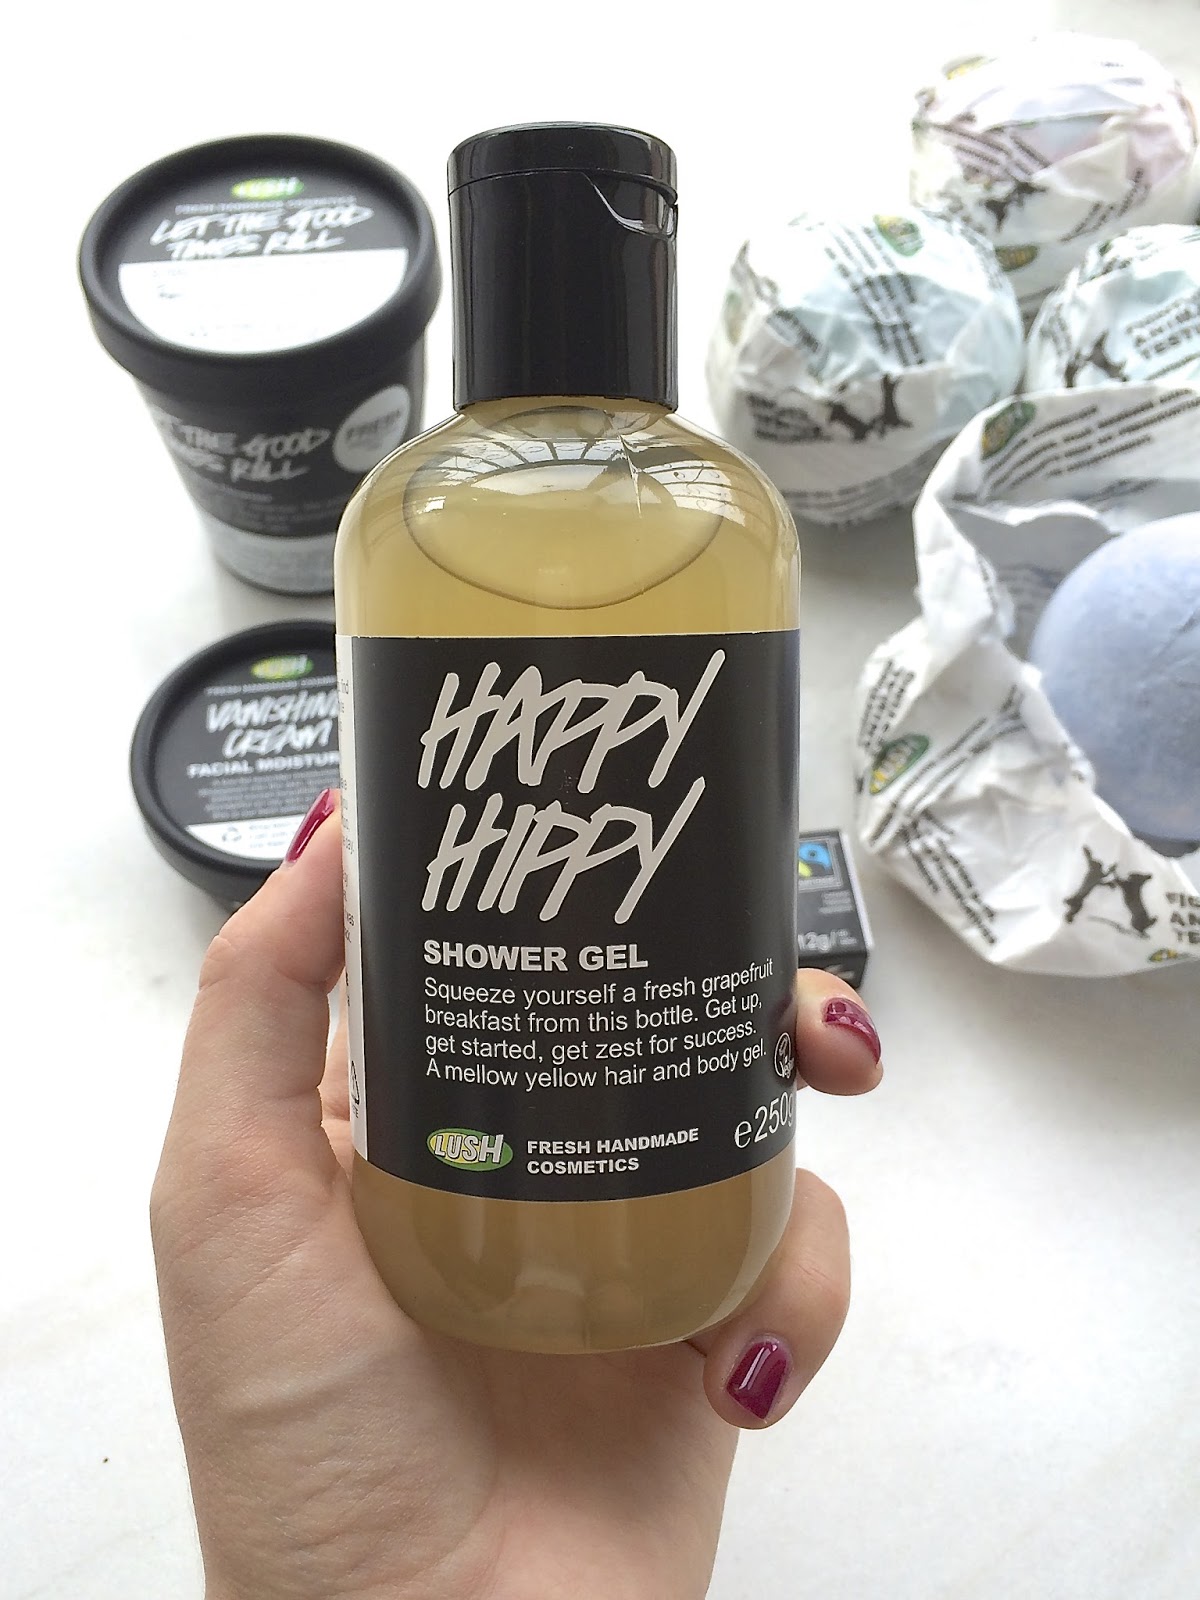 Lush Shower Gel: Happy Hippy